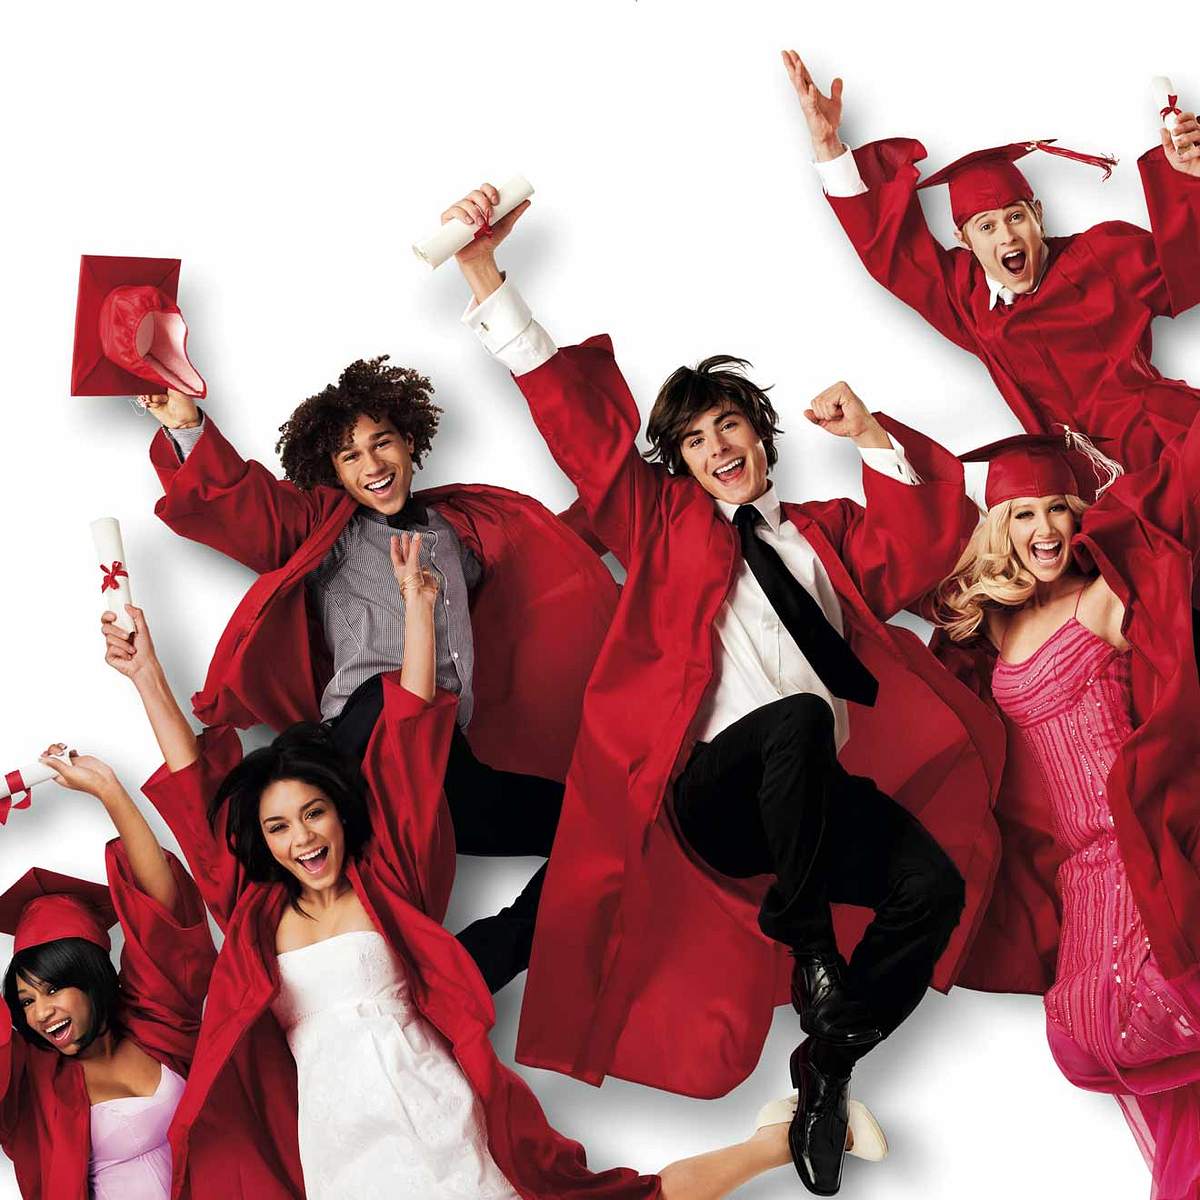 Die besten High School Filme High School Musical